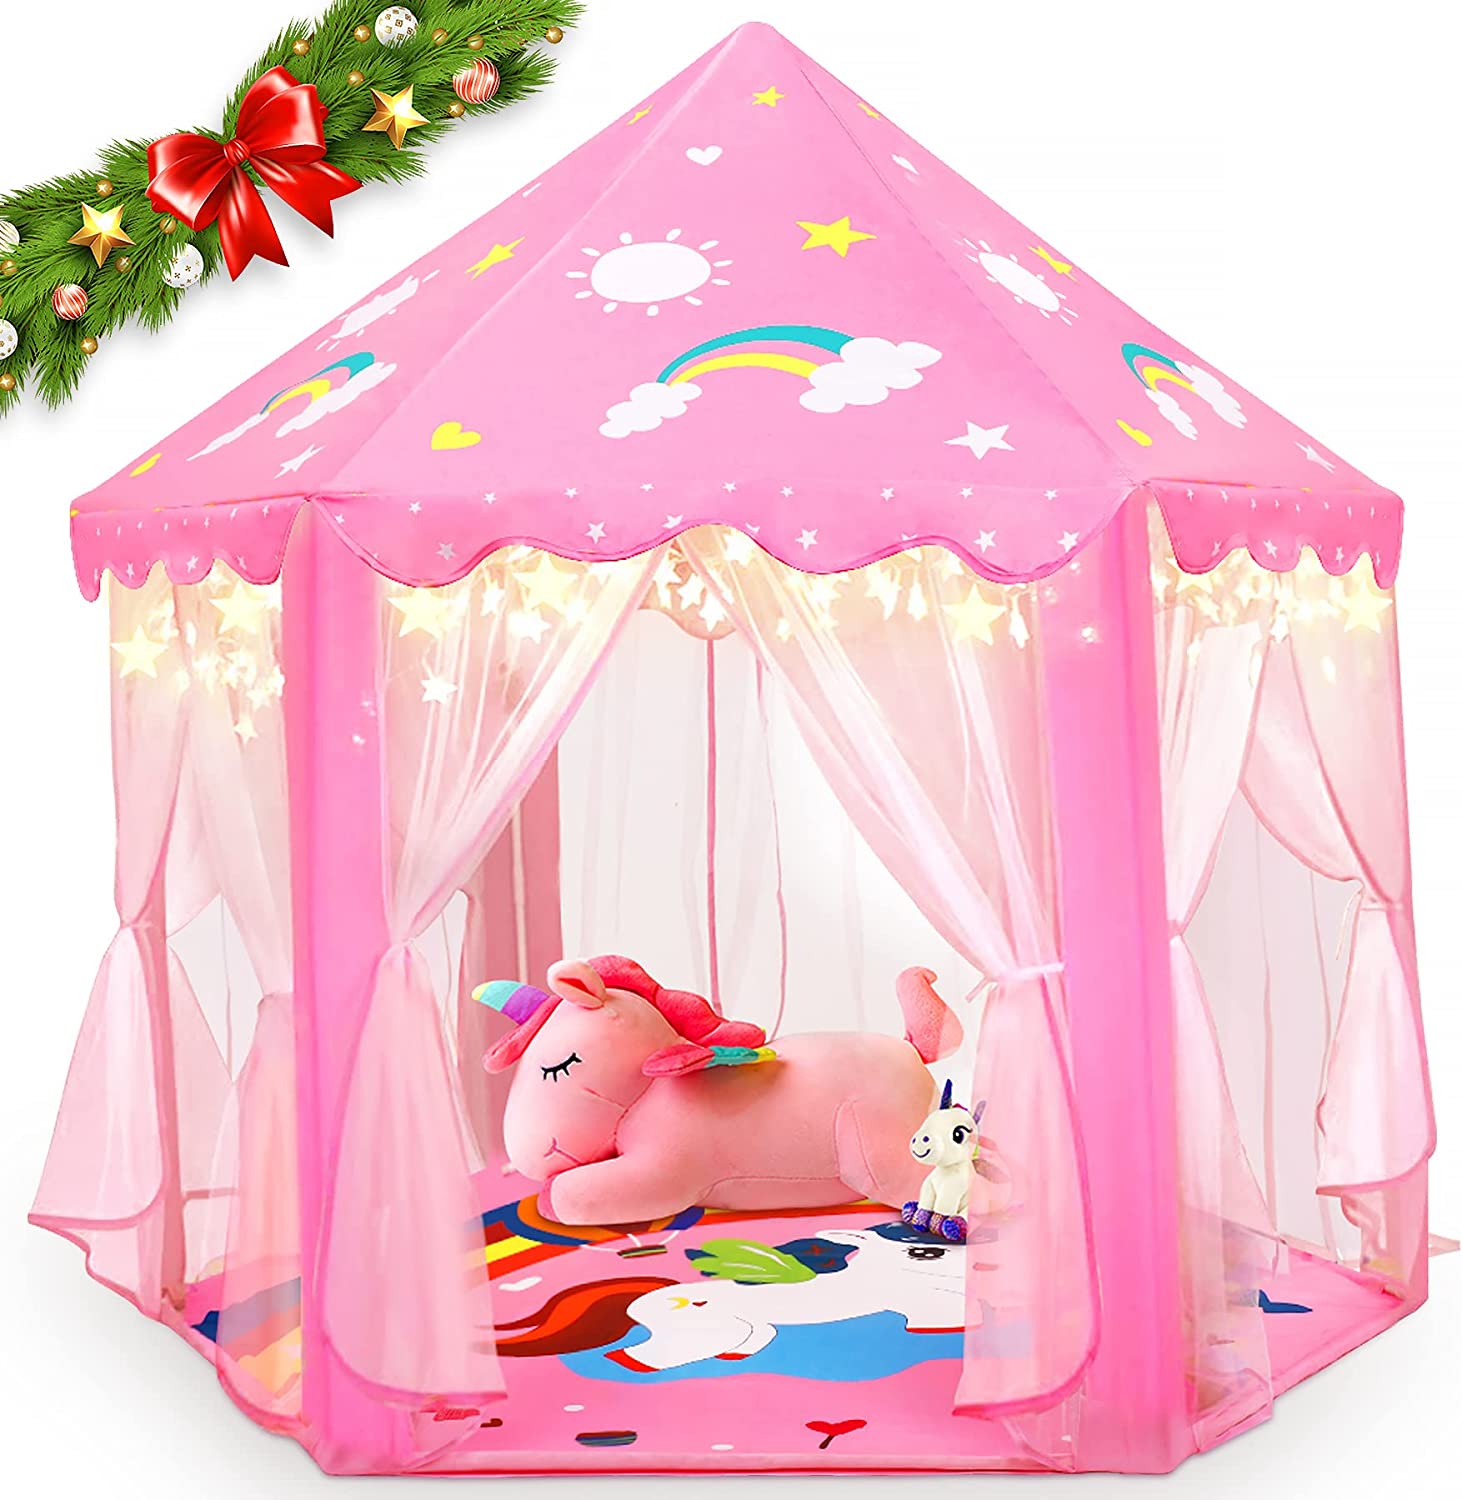  3. Unicorn Design Princess Castle Play Tent 